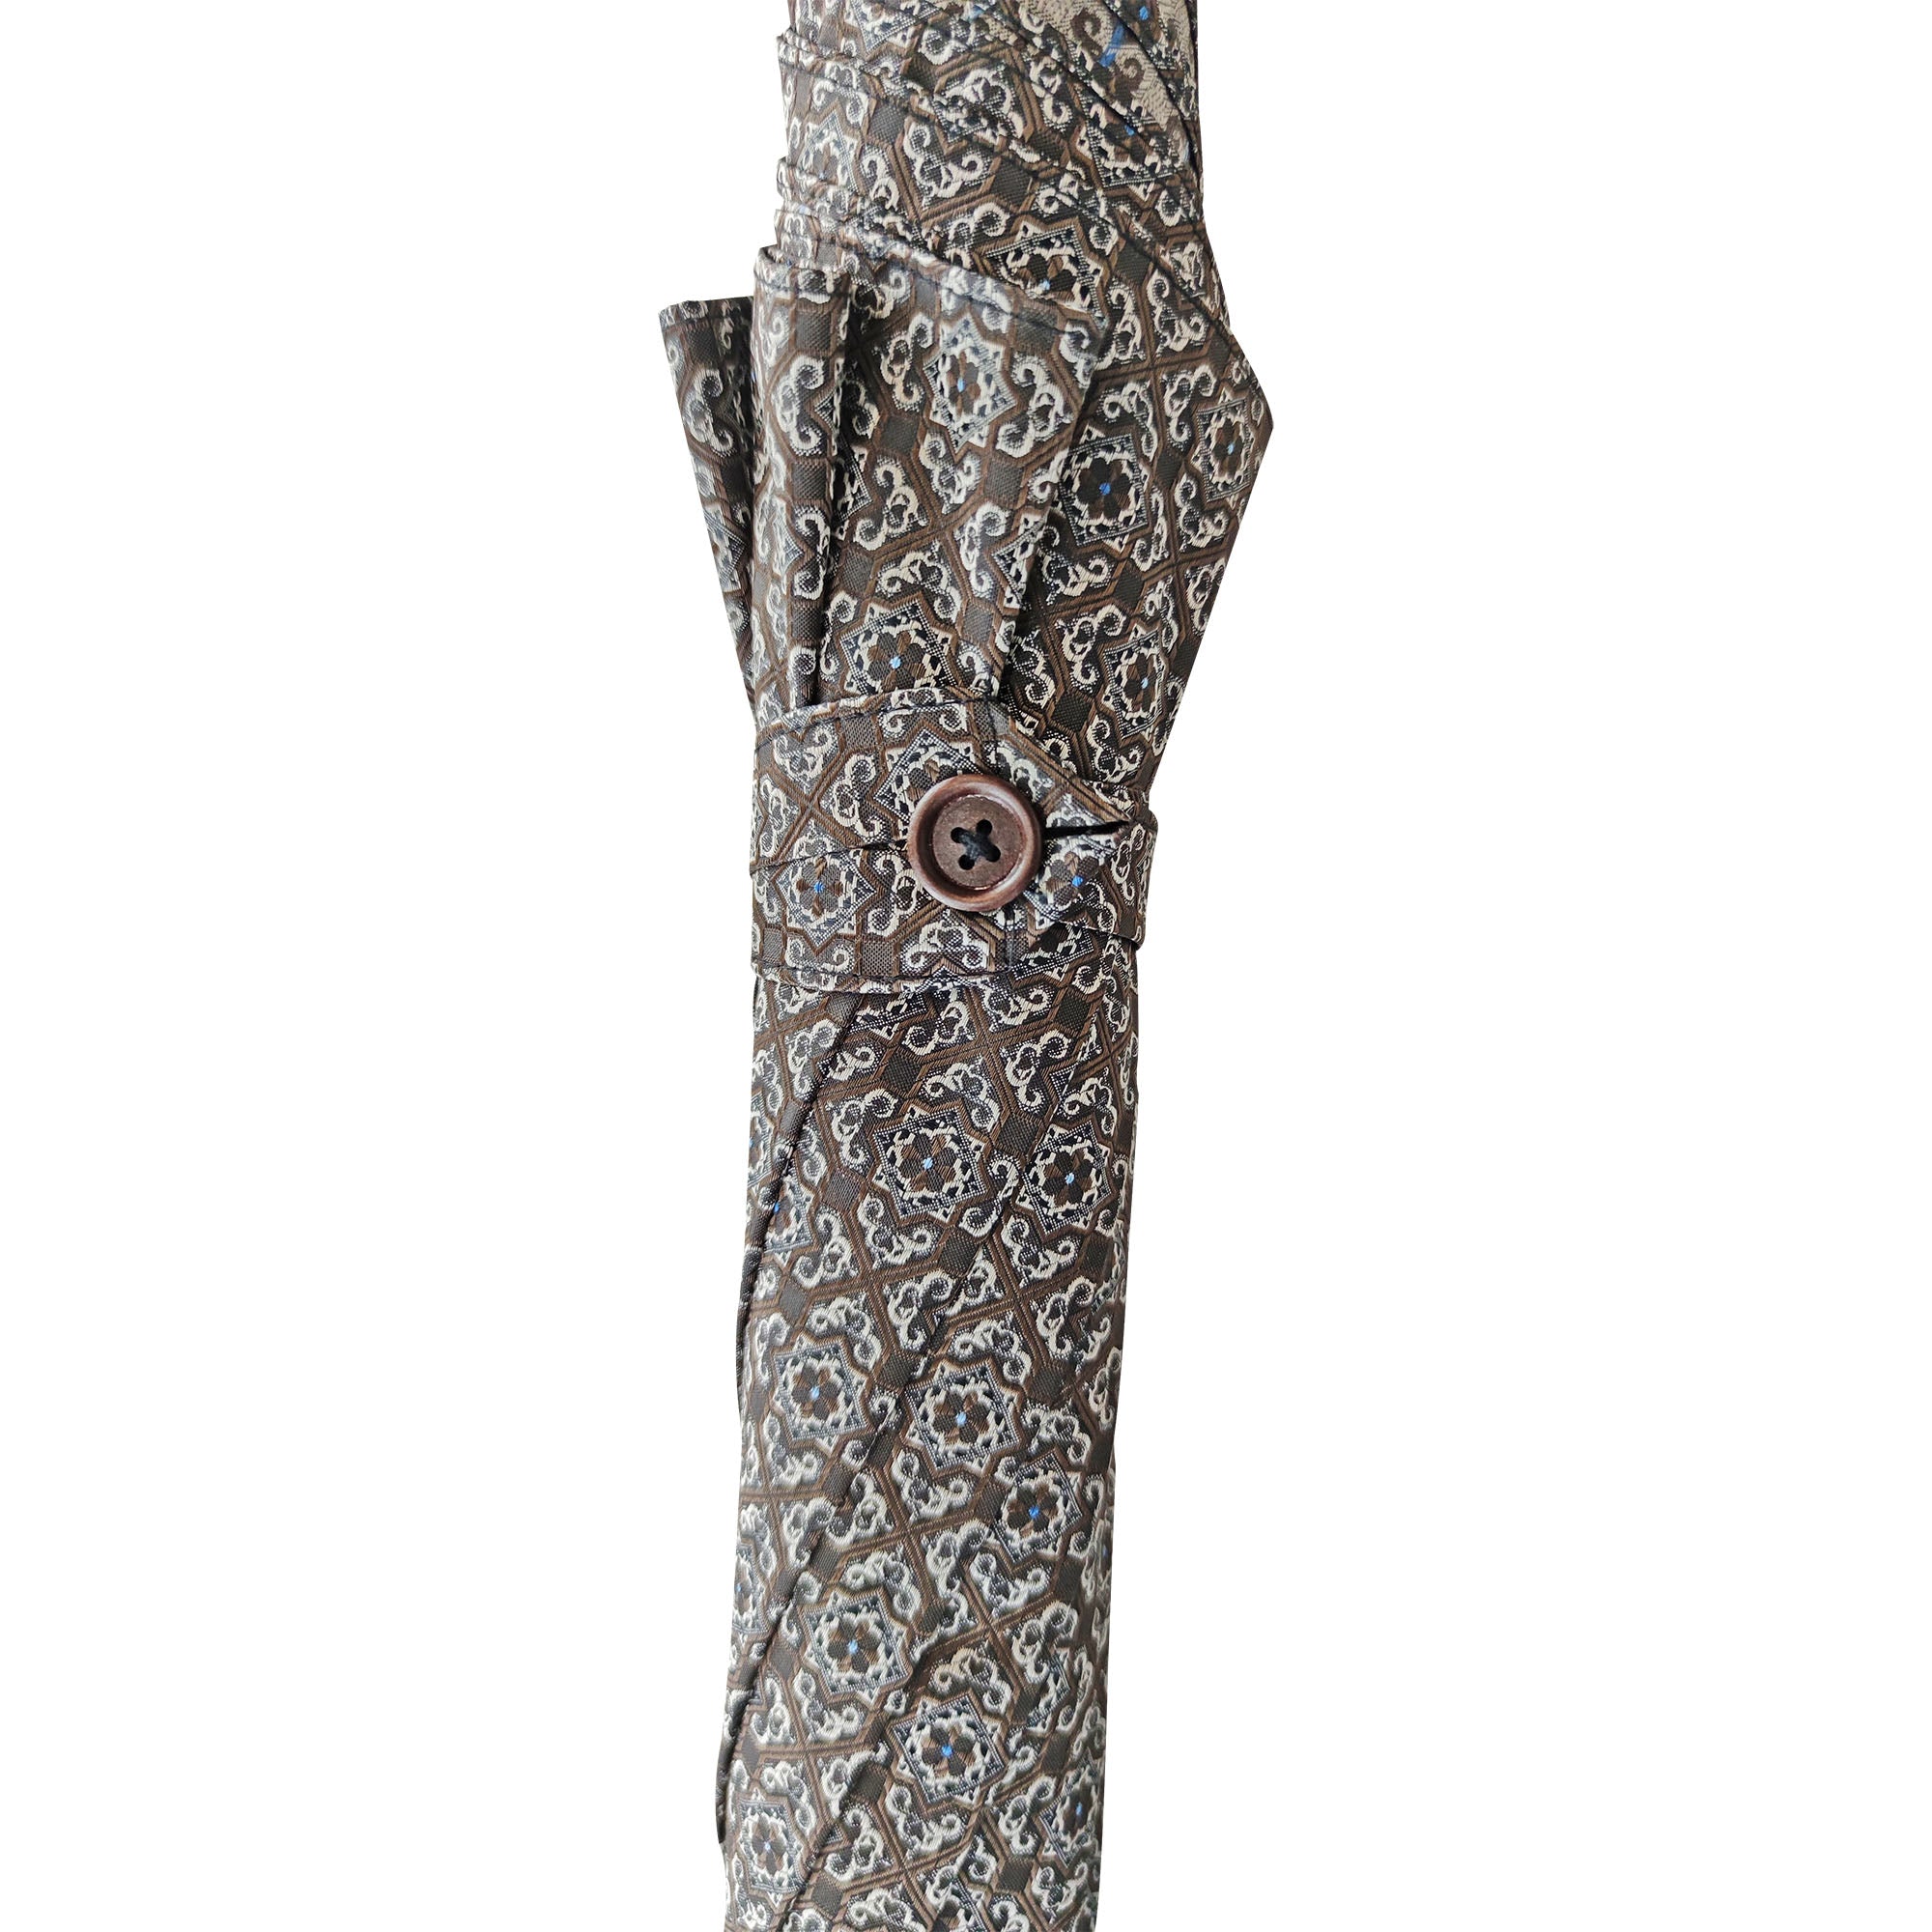 Umbrella with Caiman Crocodile leather handle